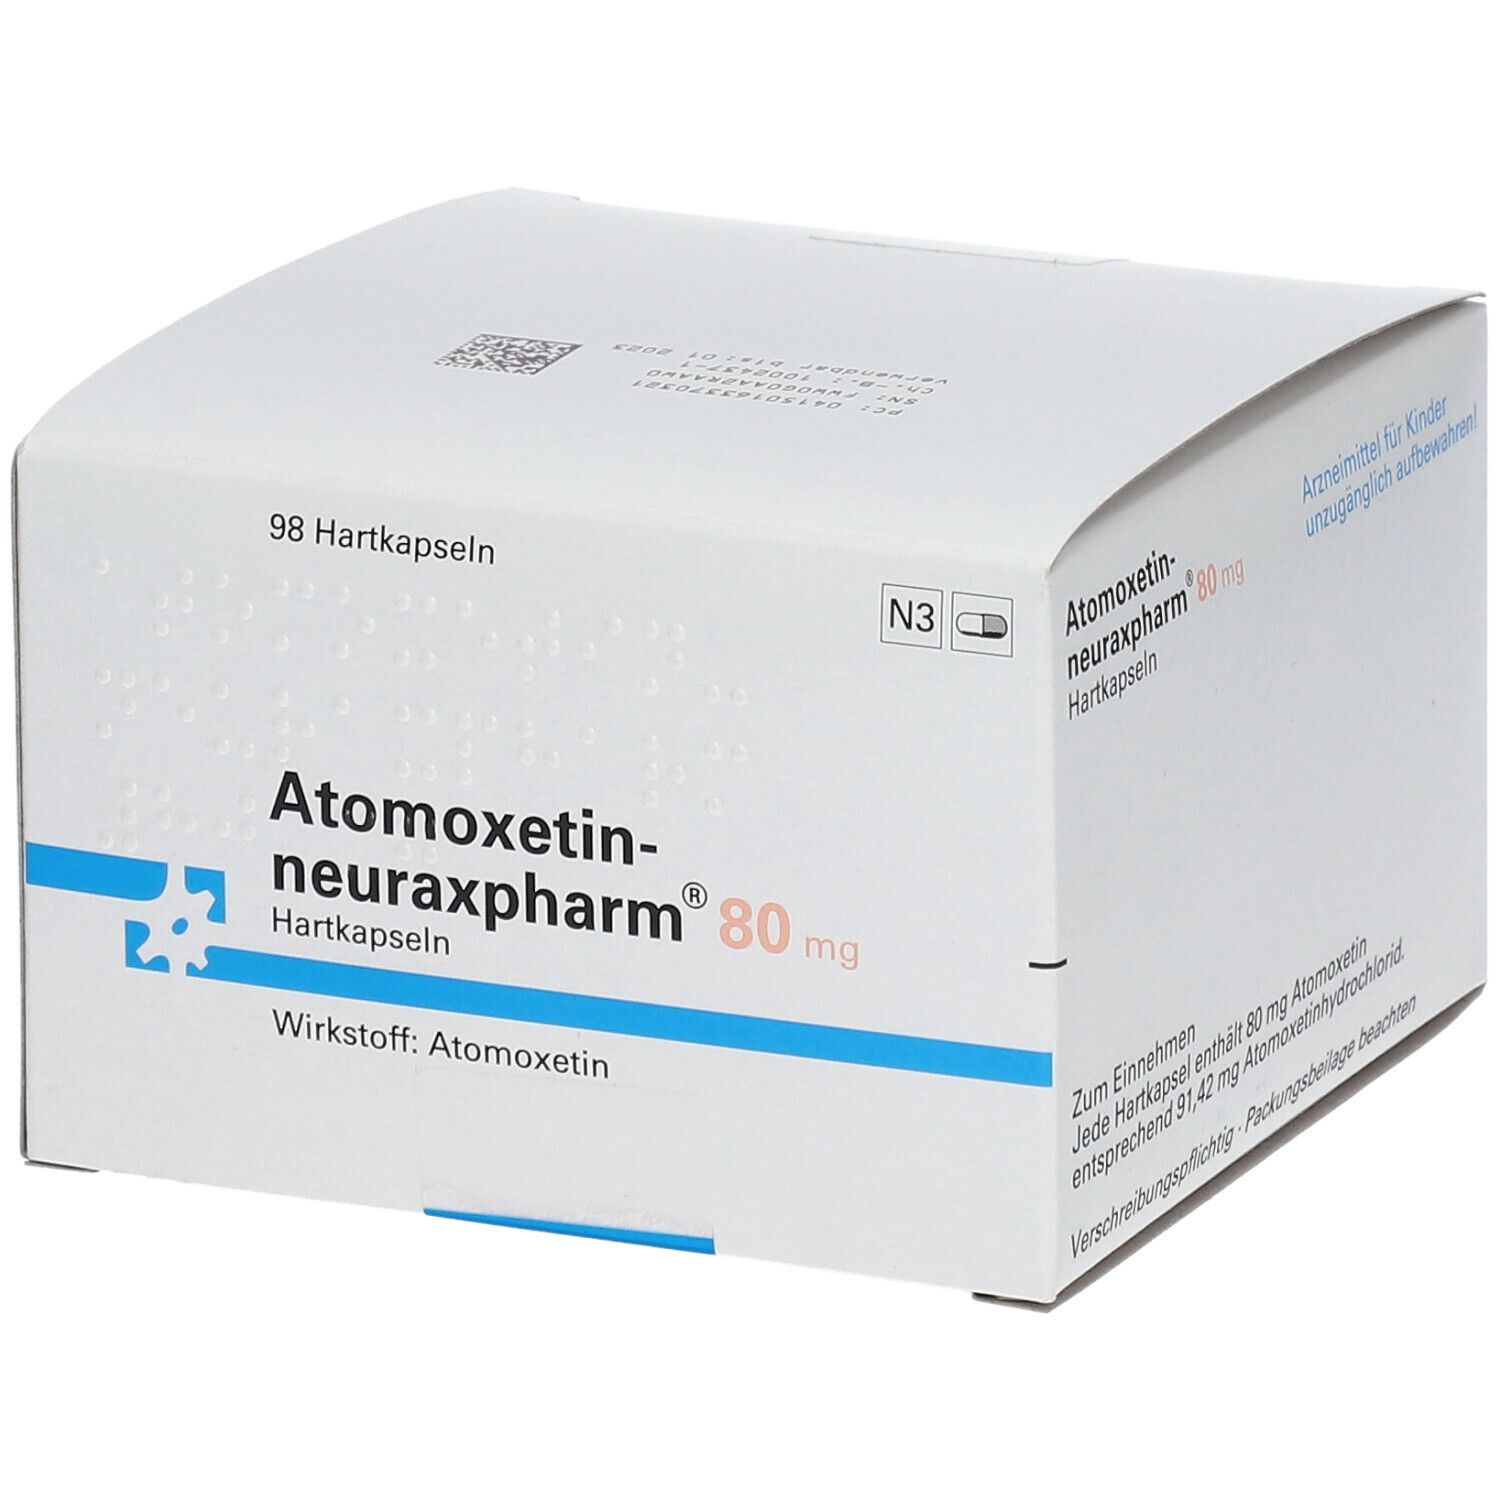 Atomoxetin-neuraxpharm® 80 mg